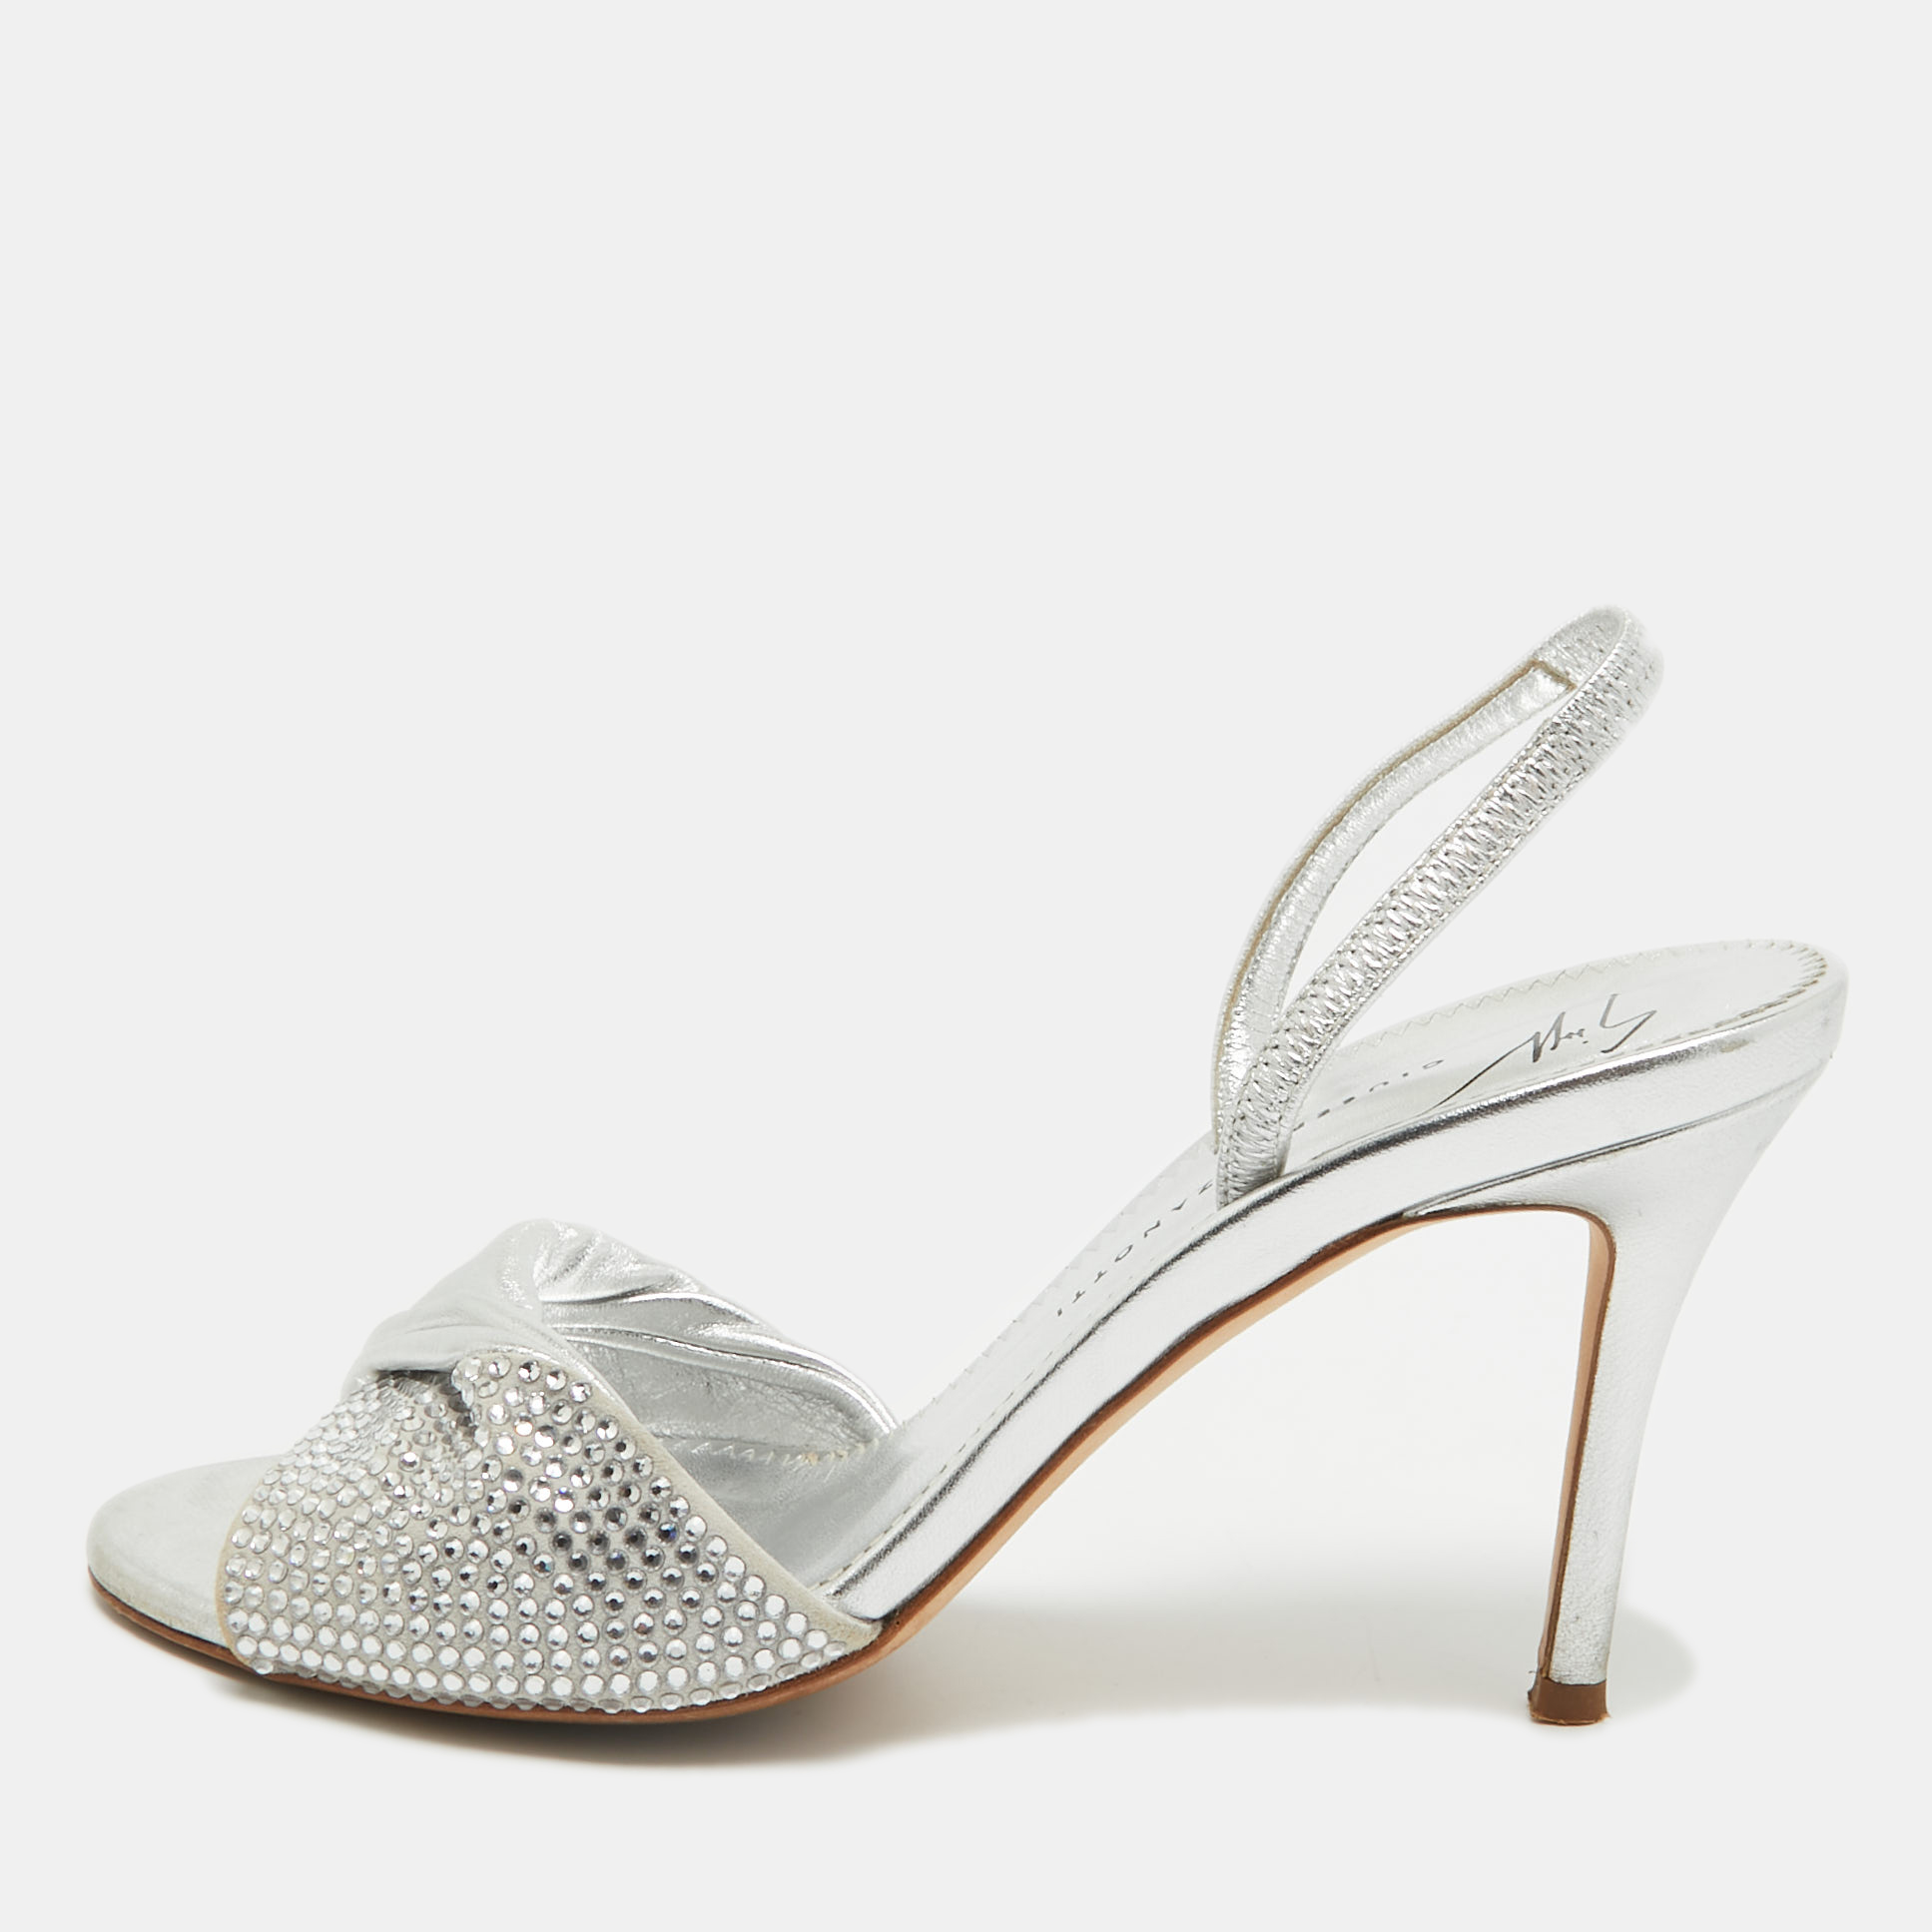 Giuseppe zanotti silver leather crystal embellished slingback sandals size 36